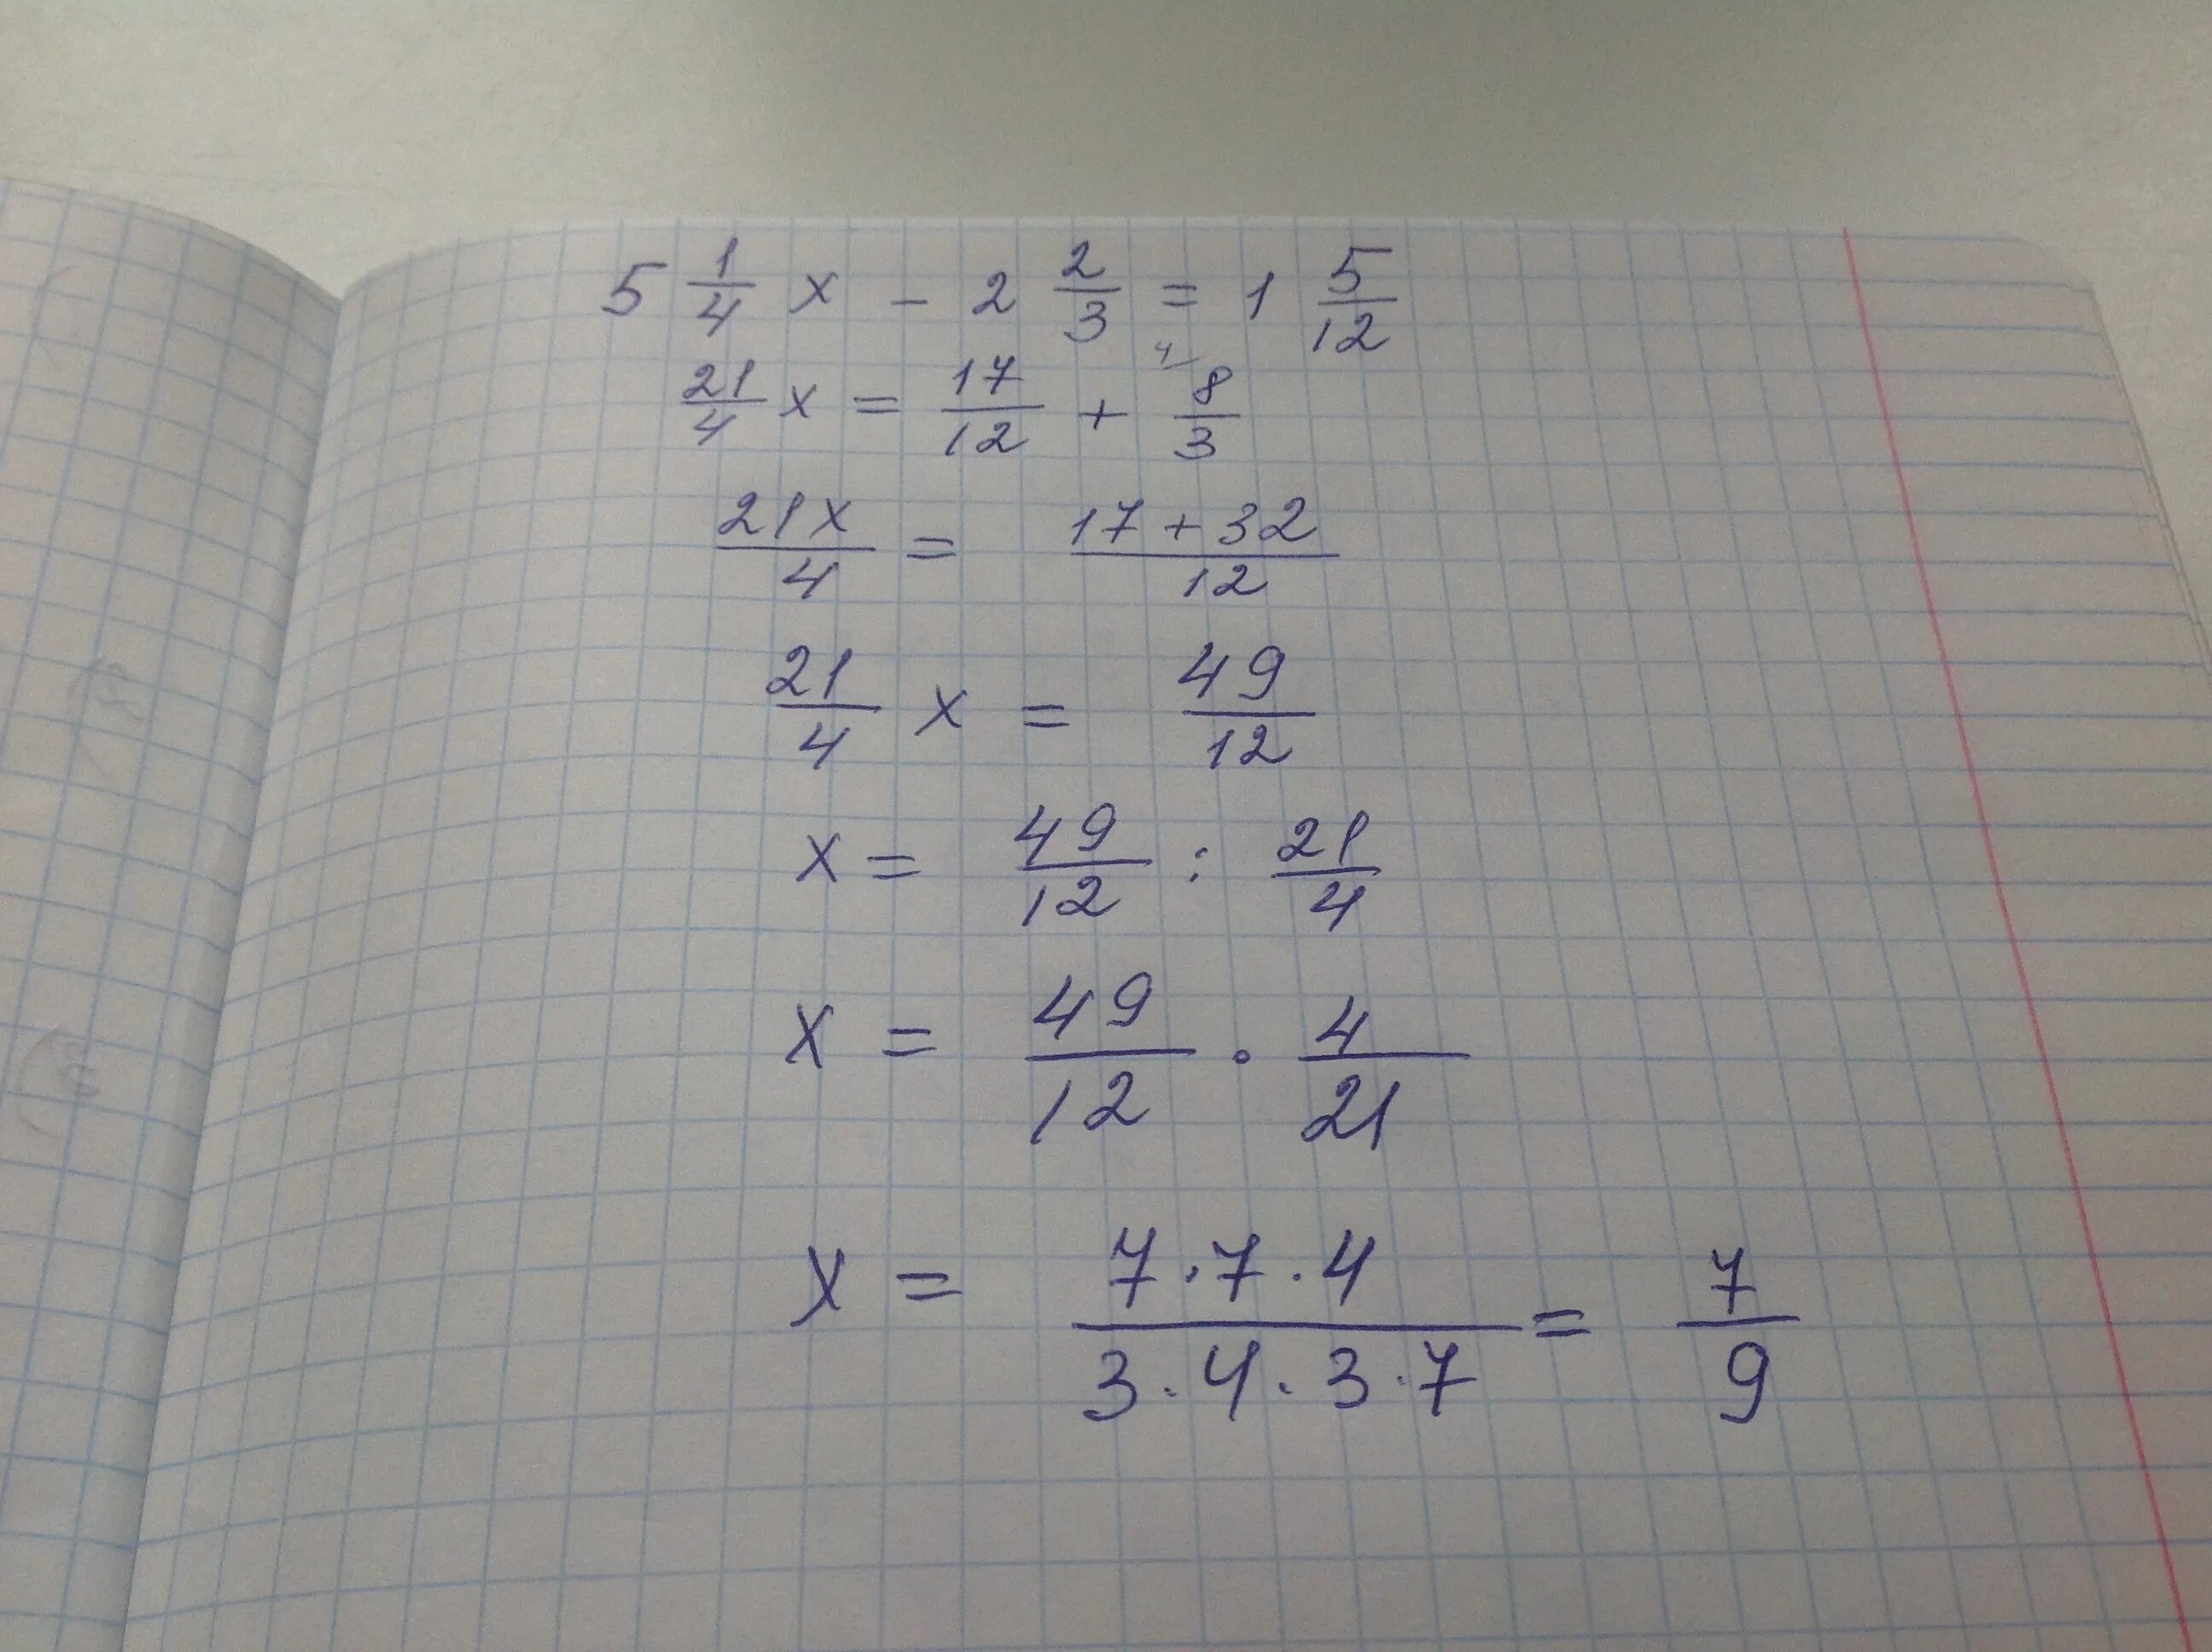 2х 7 2 ответ. 3x/5-x+1/2=1. X-4/7x=1, 2/5 решение. 4x+4/3x 2+2x-1. 2 2/9 X 7 1/5 + 11/12 X 7 1/5 - 7 1/5 Х 1 3/4.